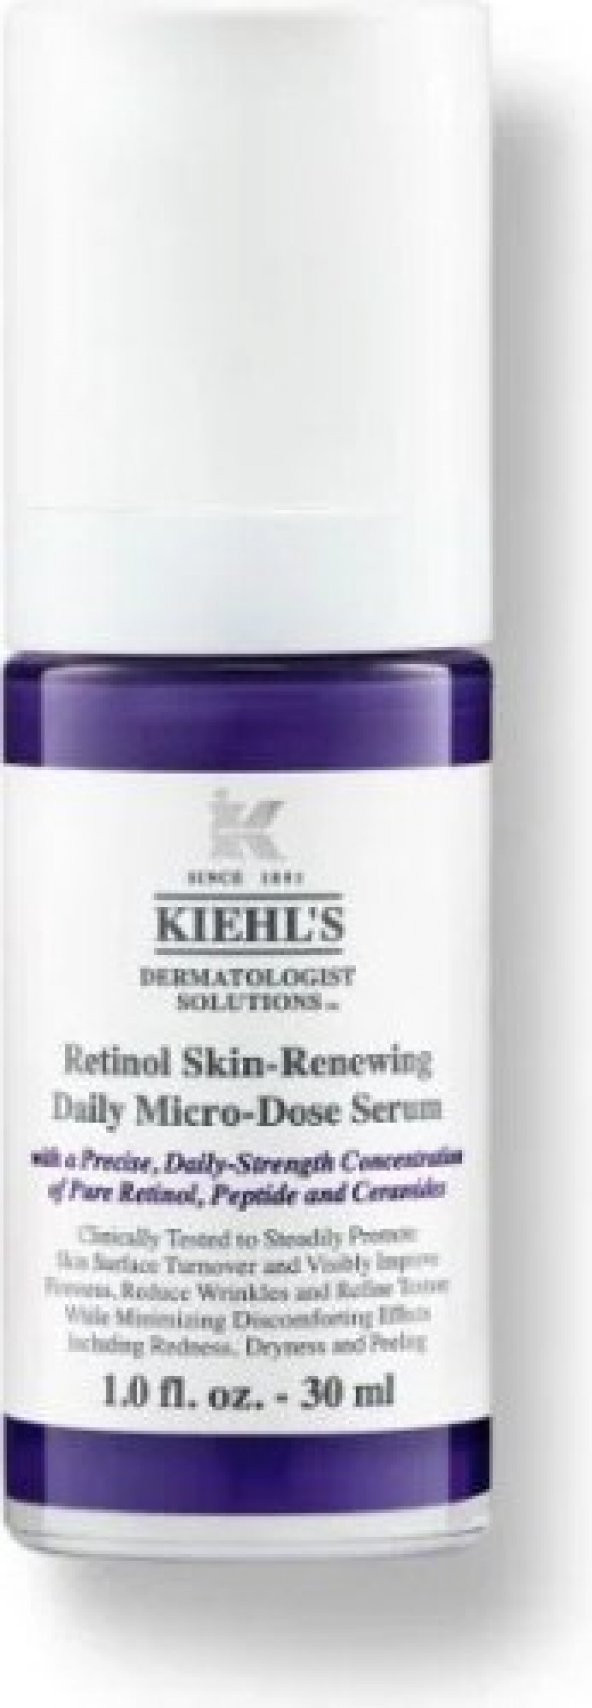 Kiehls Retinol Skin-Renewing Daily Micro-Dose Serum 30ML